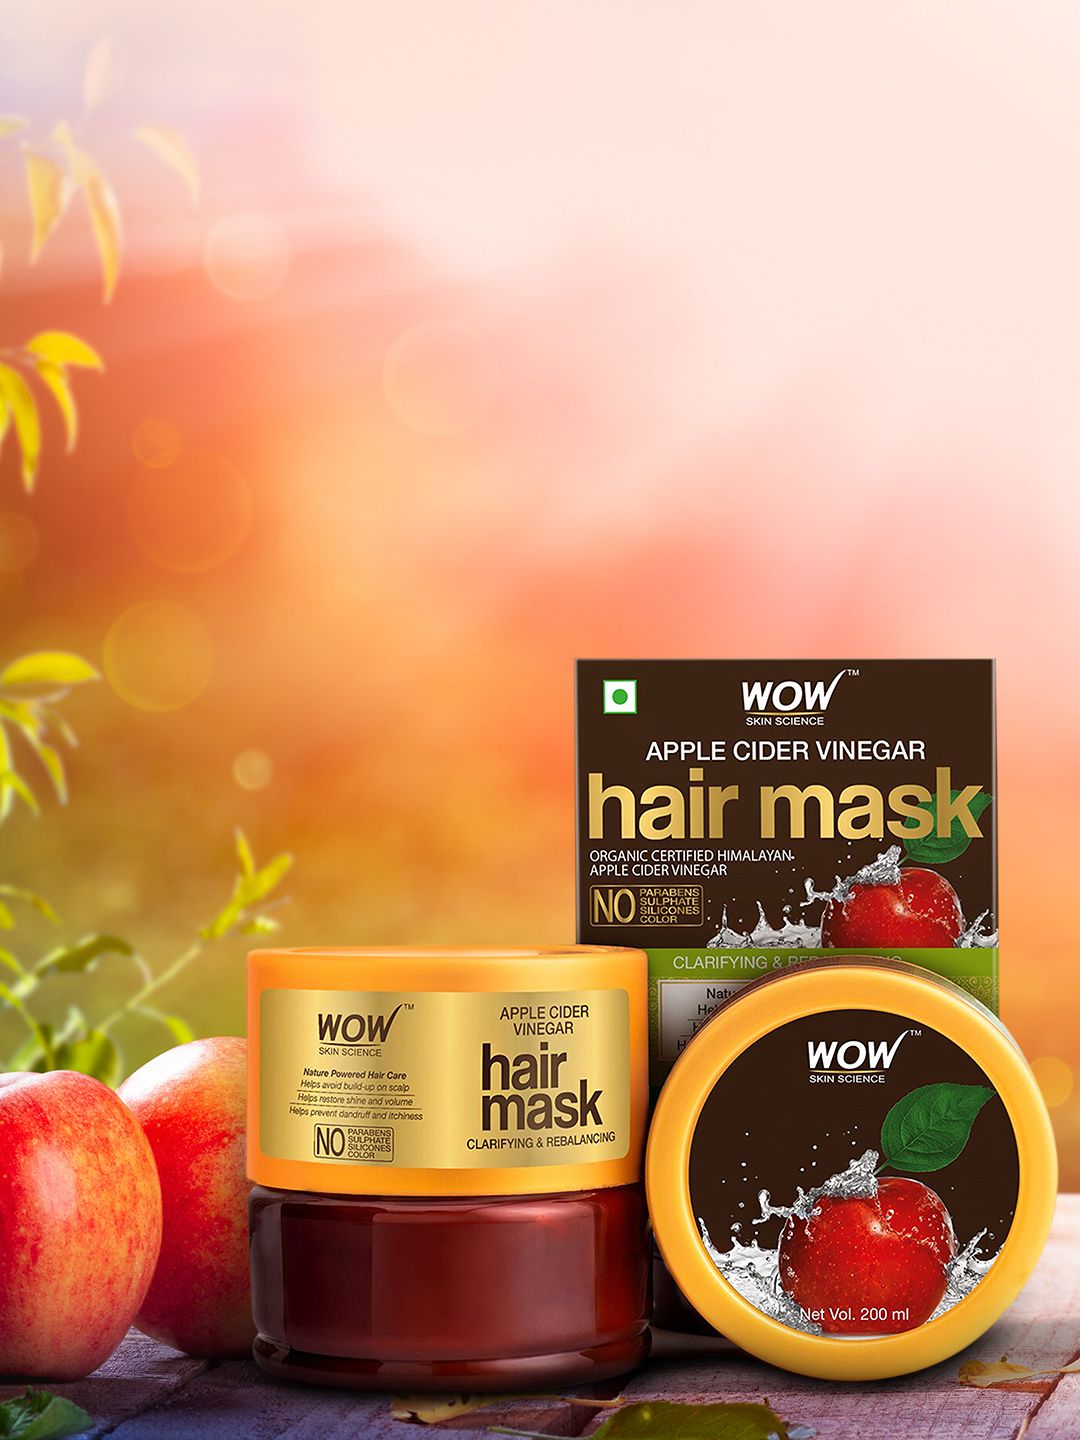 WOW SKIN SCIENCE Apple Cider Vinegar Hair Mask 200 ml Price in India